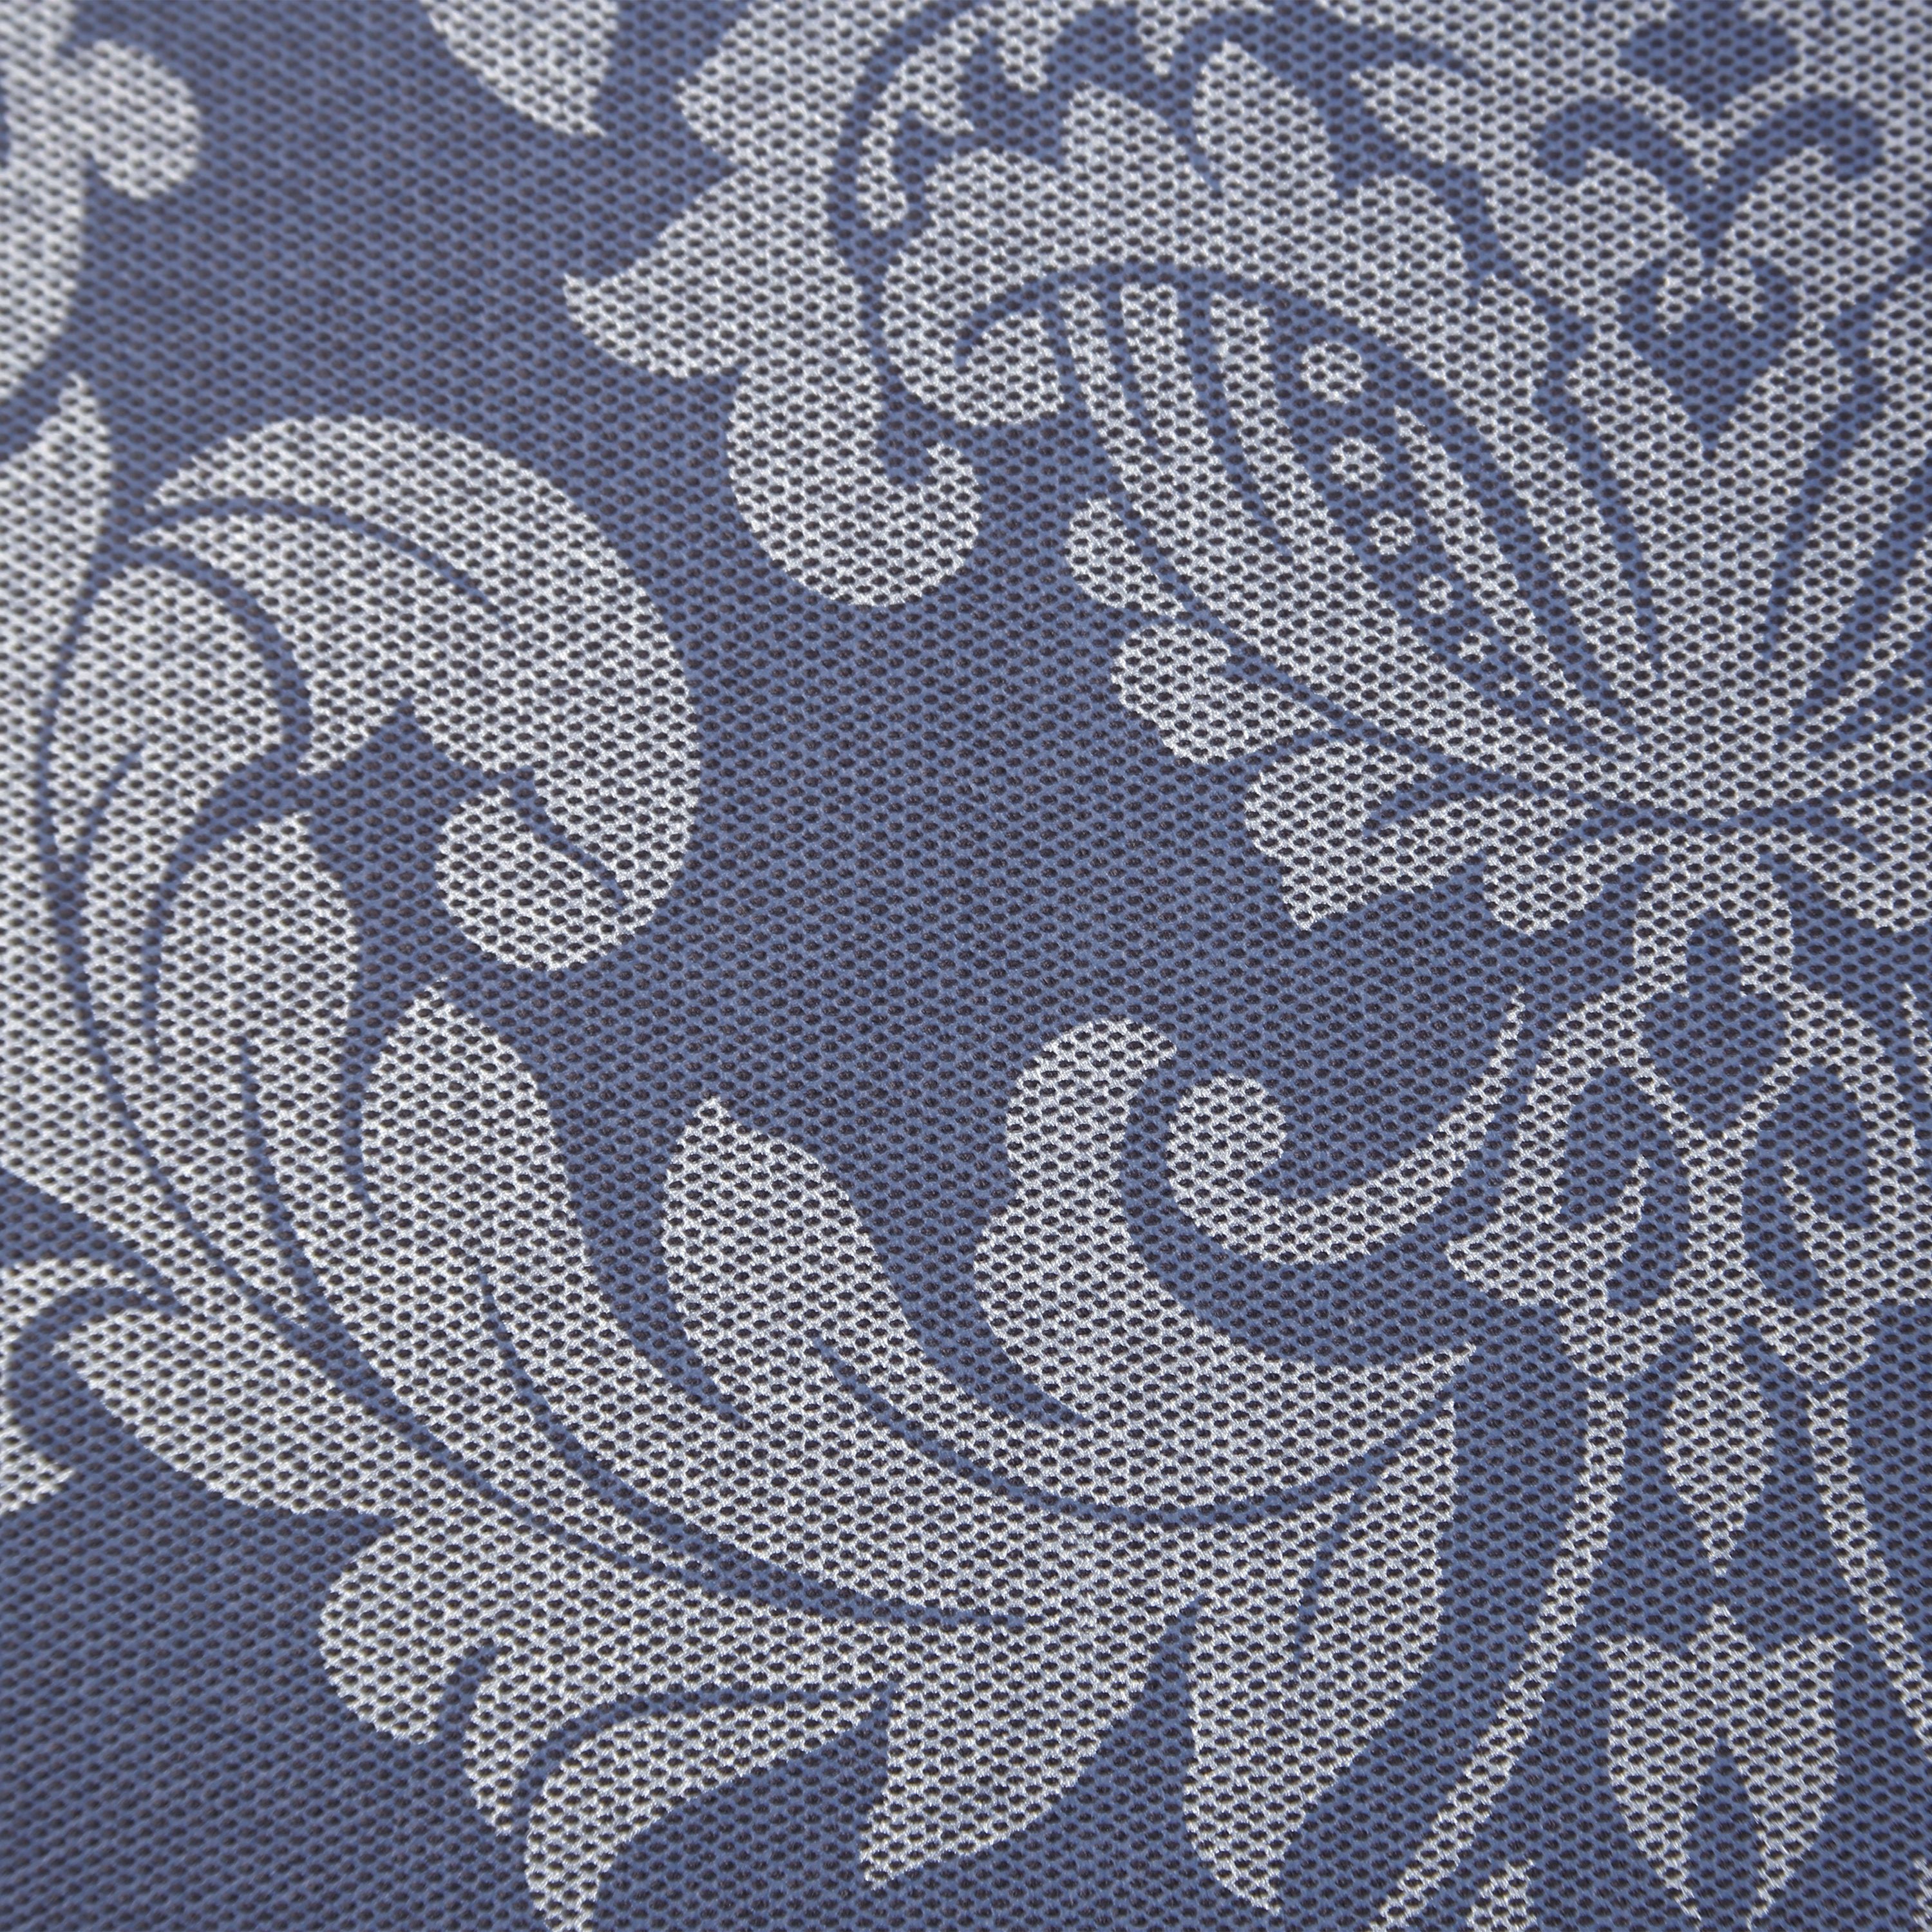 GoodHome Ornata Midnight blue Damask Textured Wallpaper